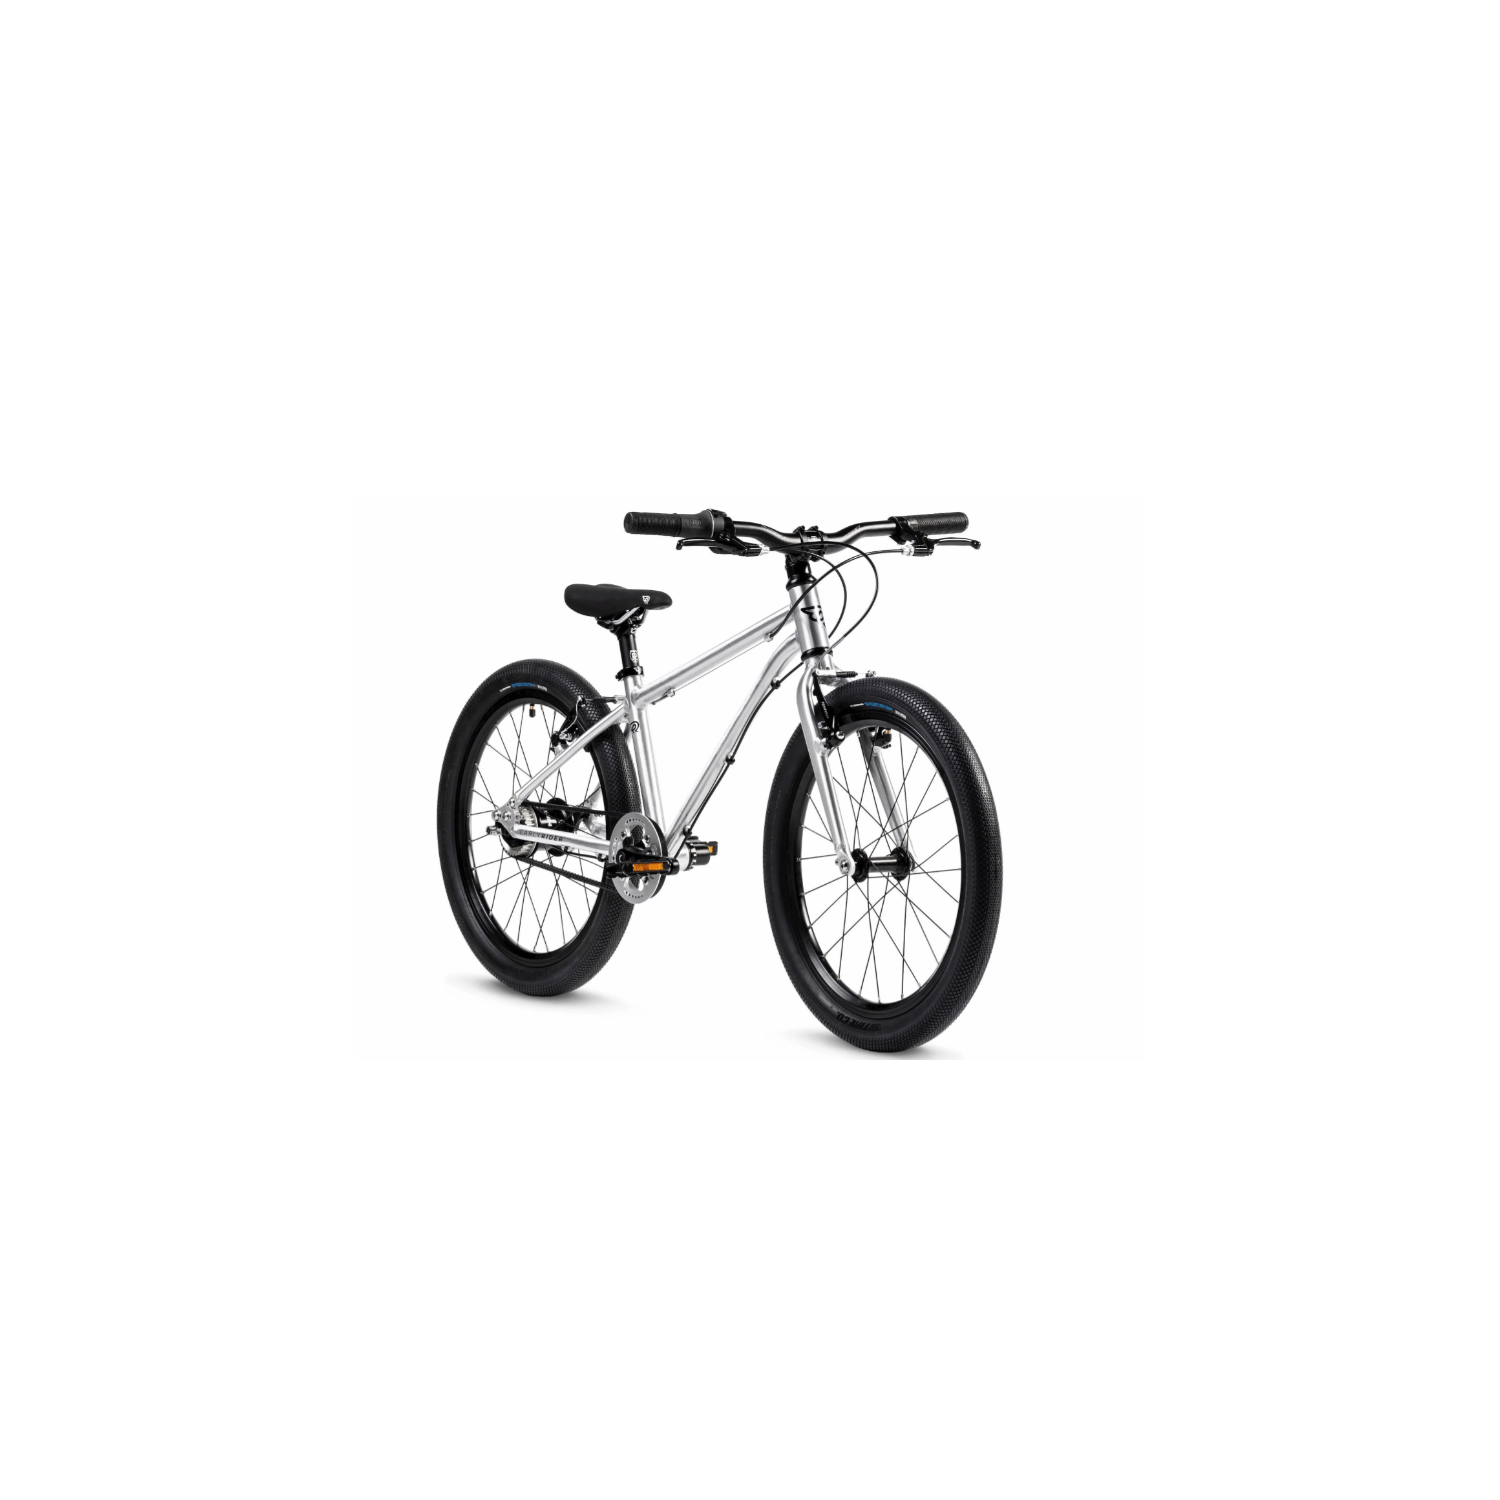 Rower Early Rider Belter 20'' Urban 3 dla dzieci 6-9 lat